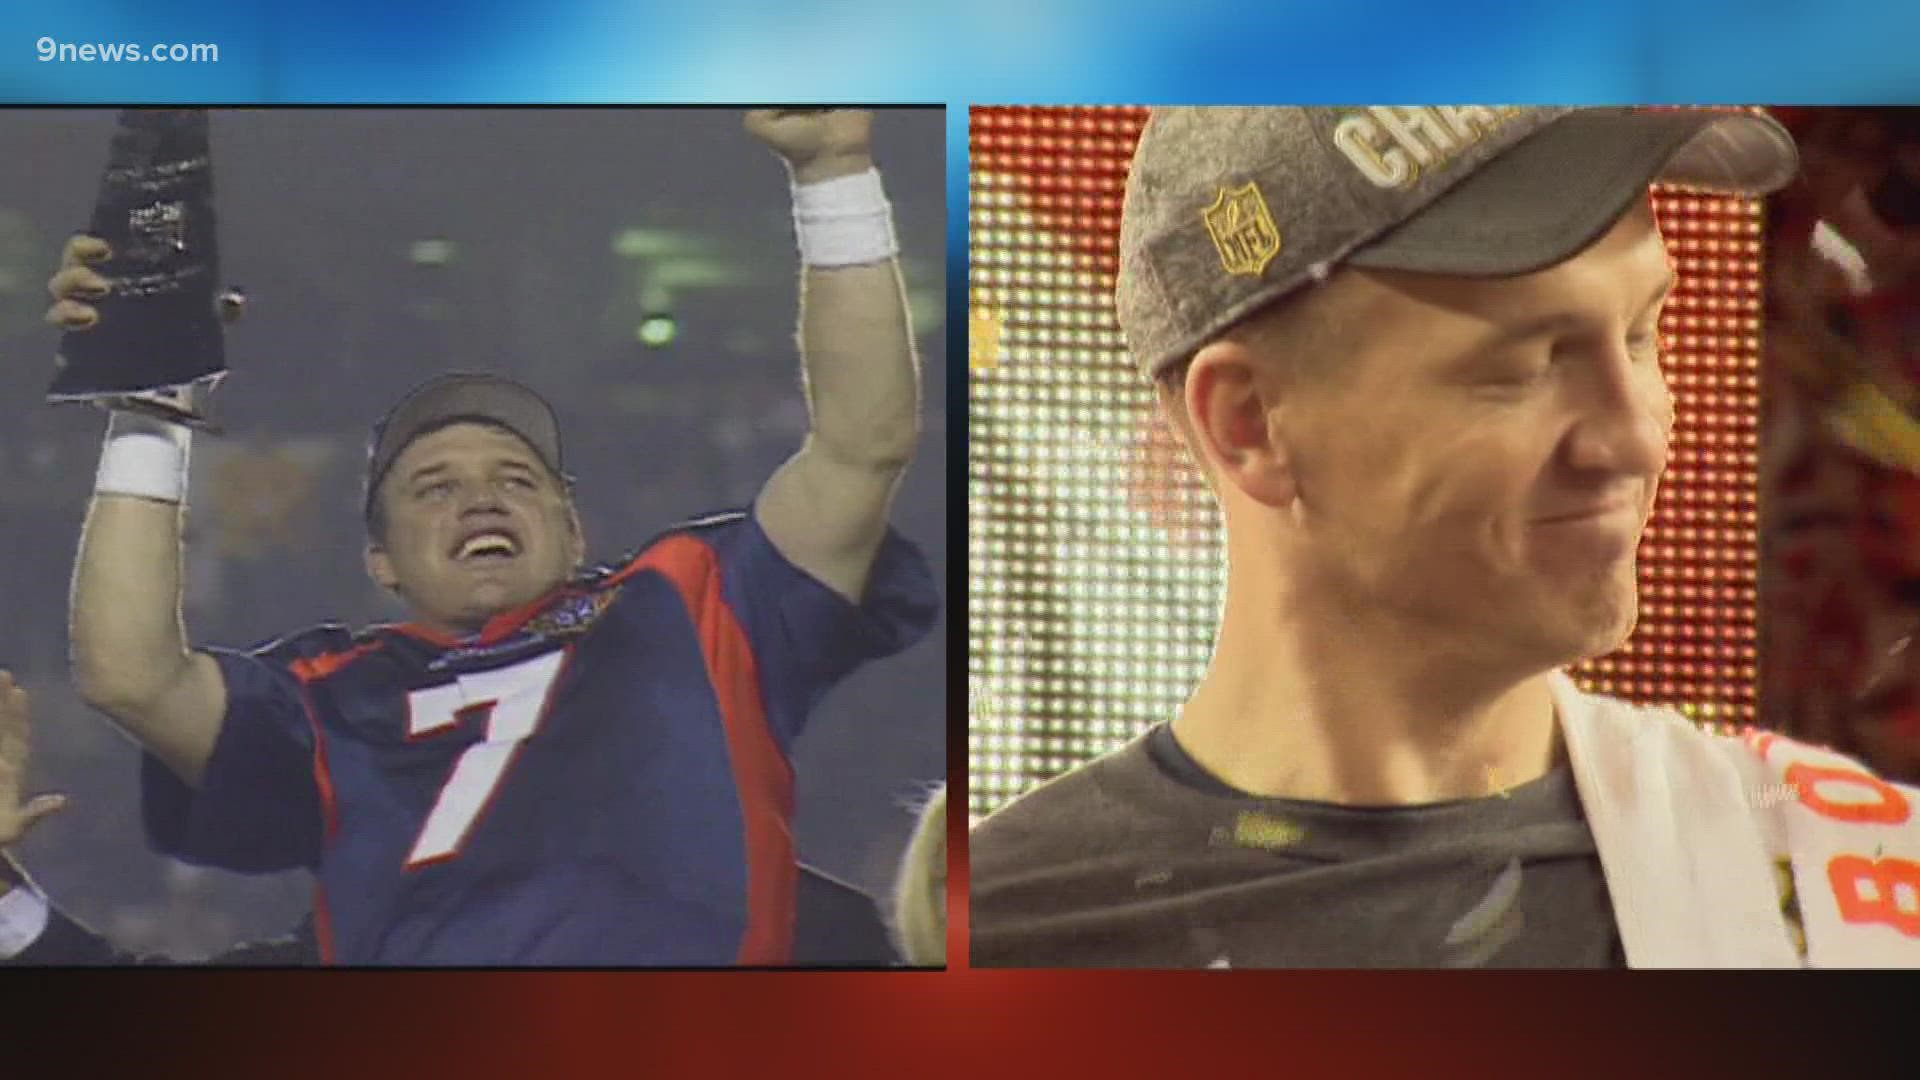 Former Super Bowl quarterbacks John Elway and Peyton Manning gave expressed interest in being involved after the Denver Broncos are sold.